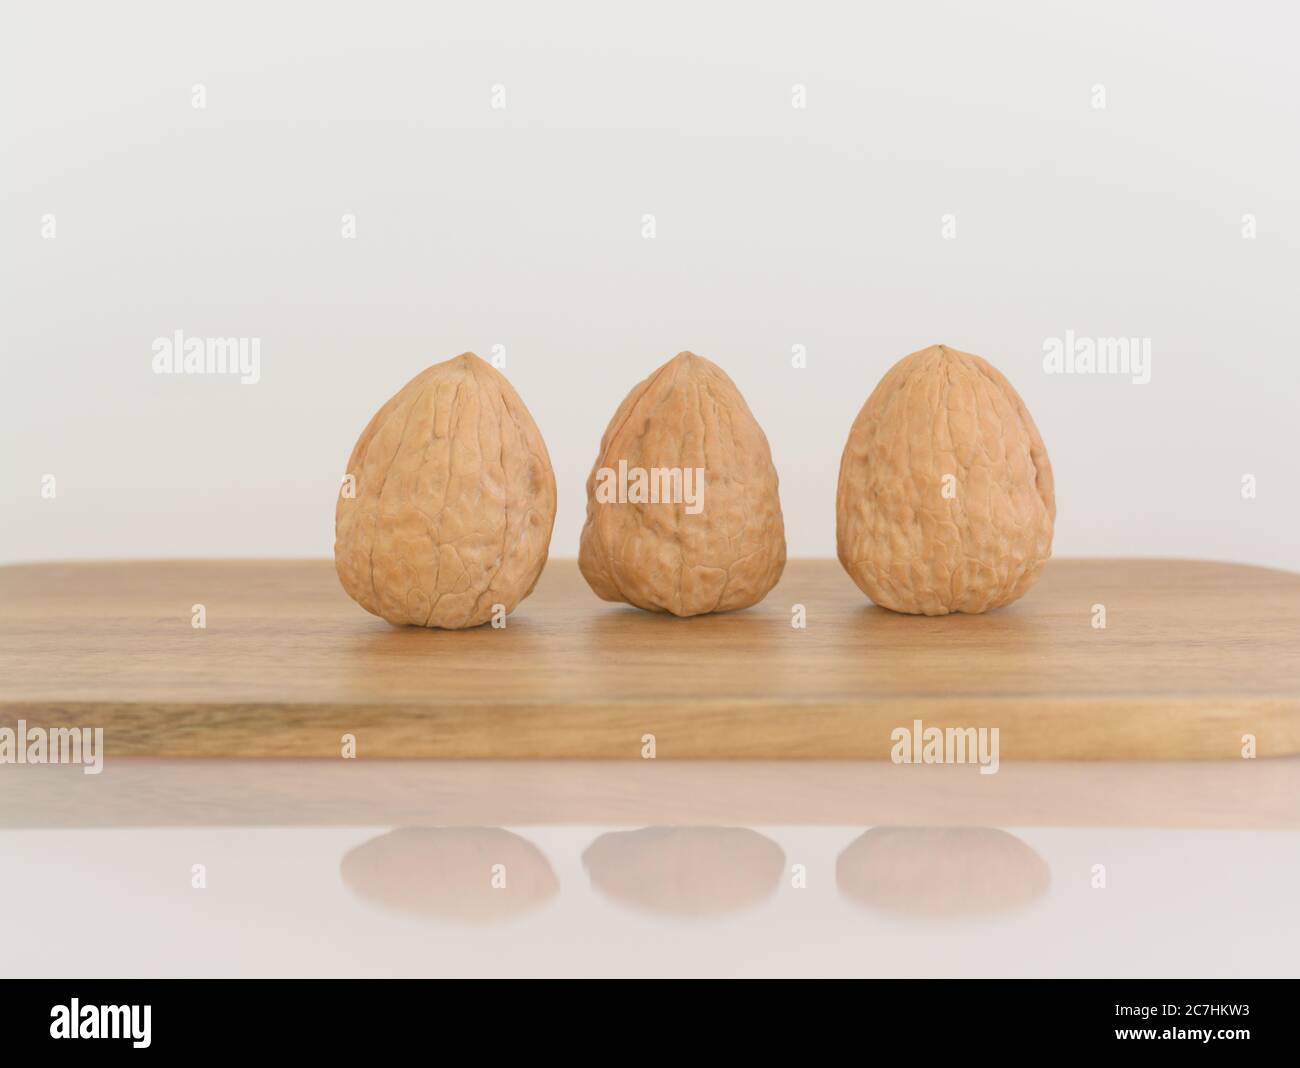 Three walnuts on a wooden cutting board Stock Photo